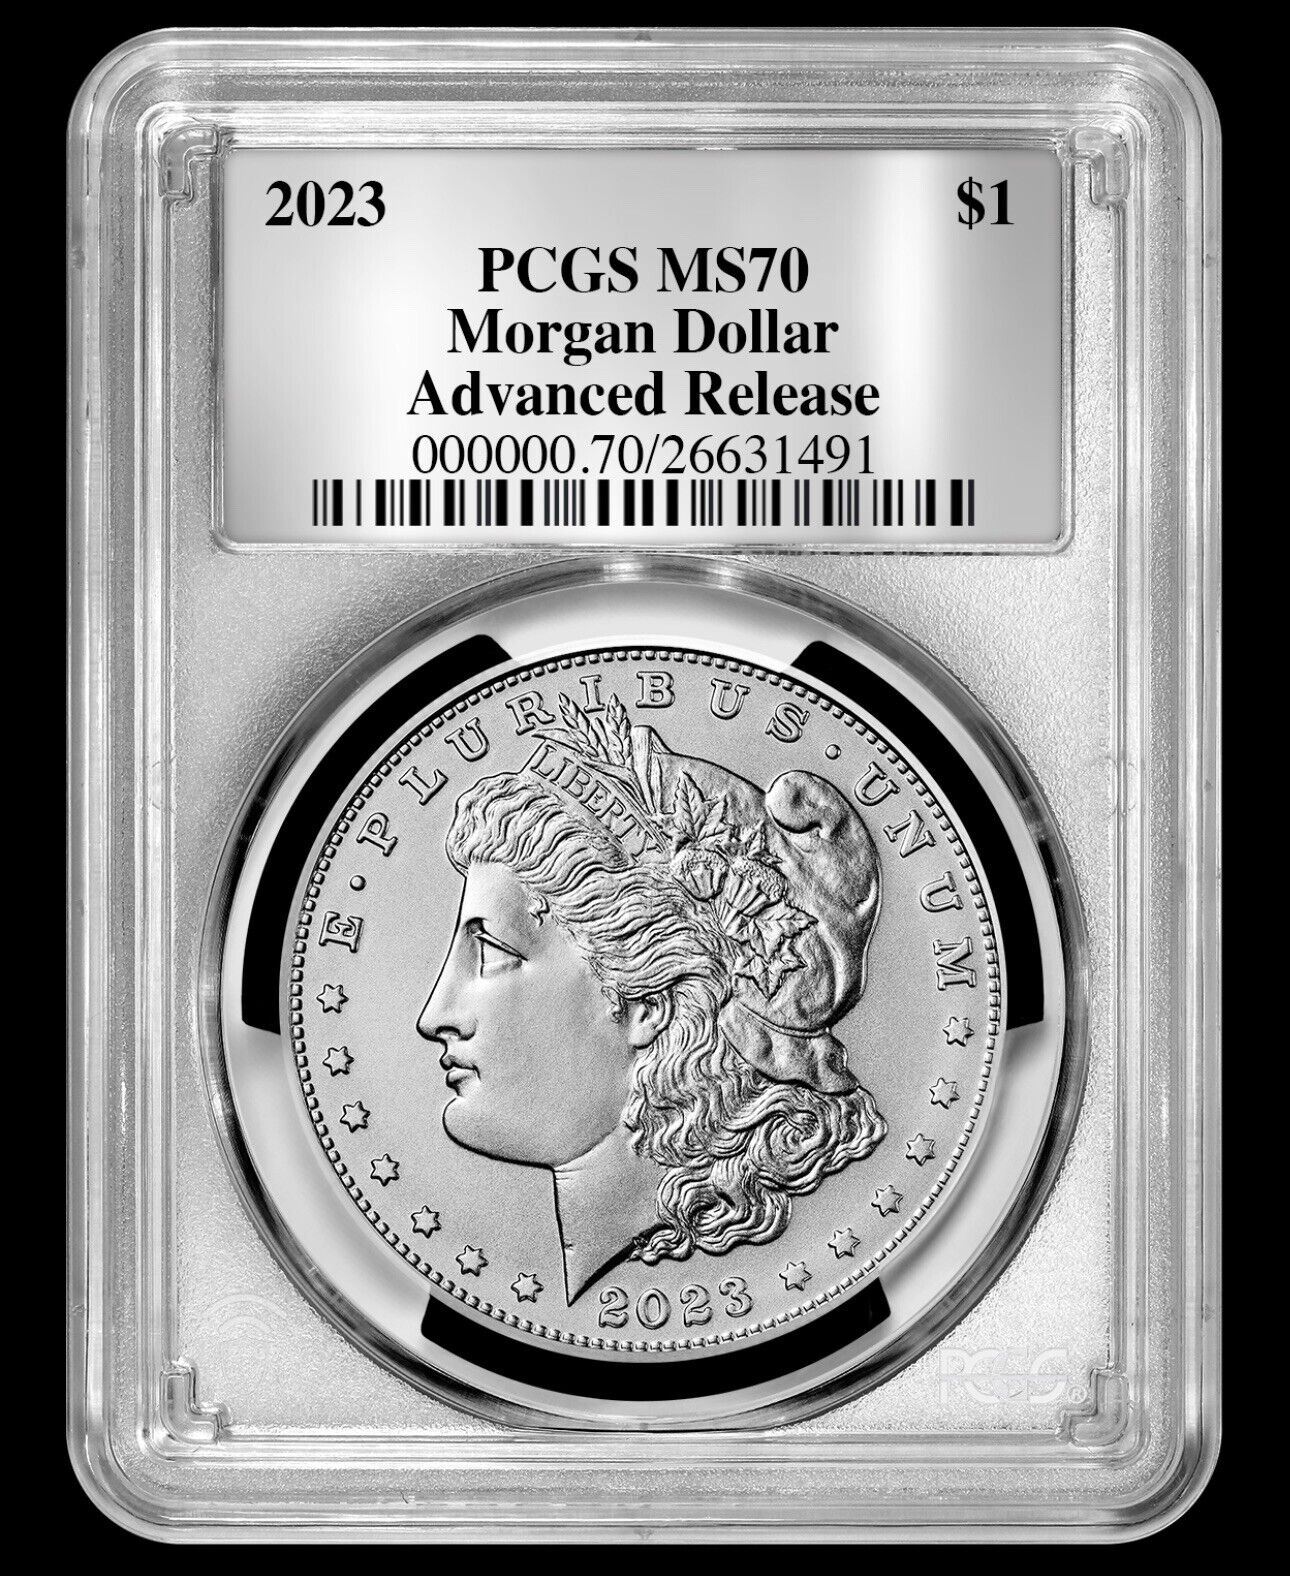 2023 Morgan & Peace Dollar $1 (MS70) PCGS Advanced Release AR -Silver Foil Label